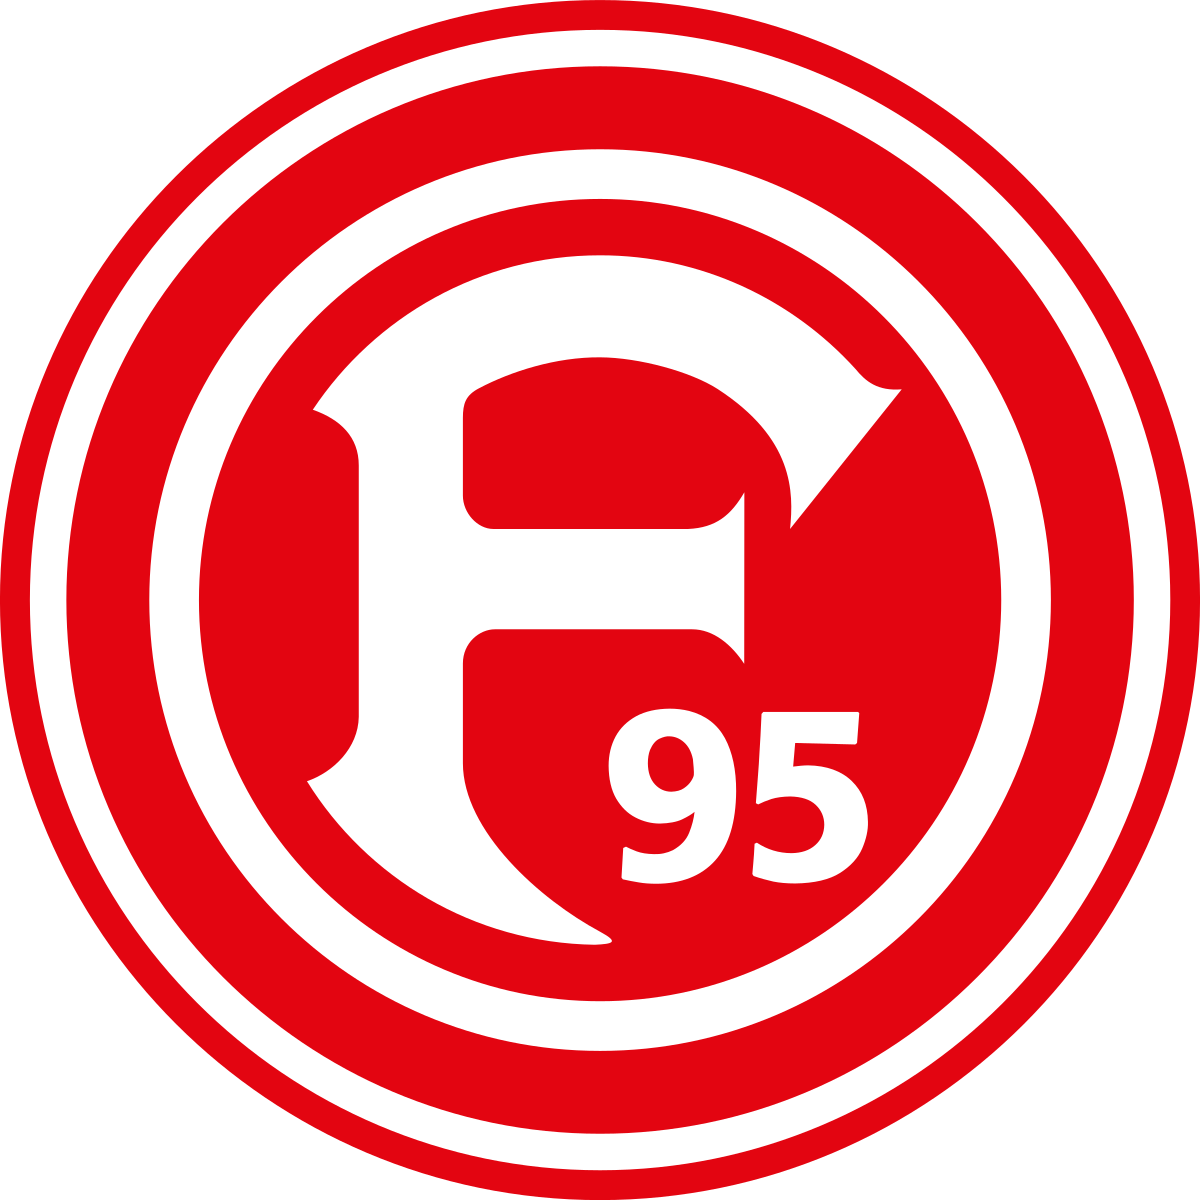 Fortuna Dusseldorf U19